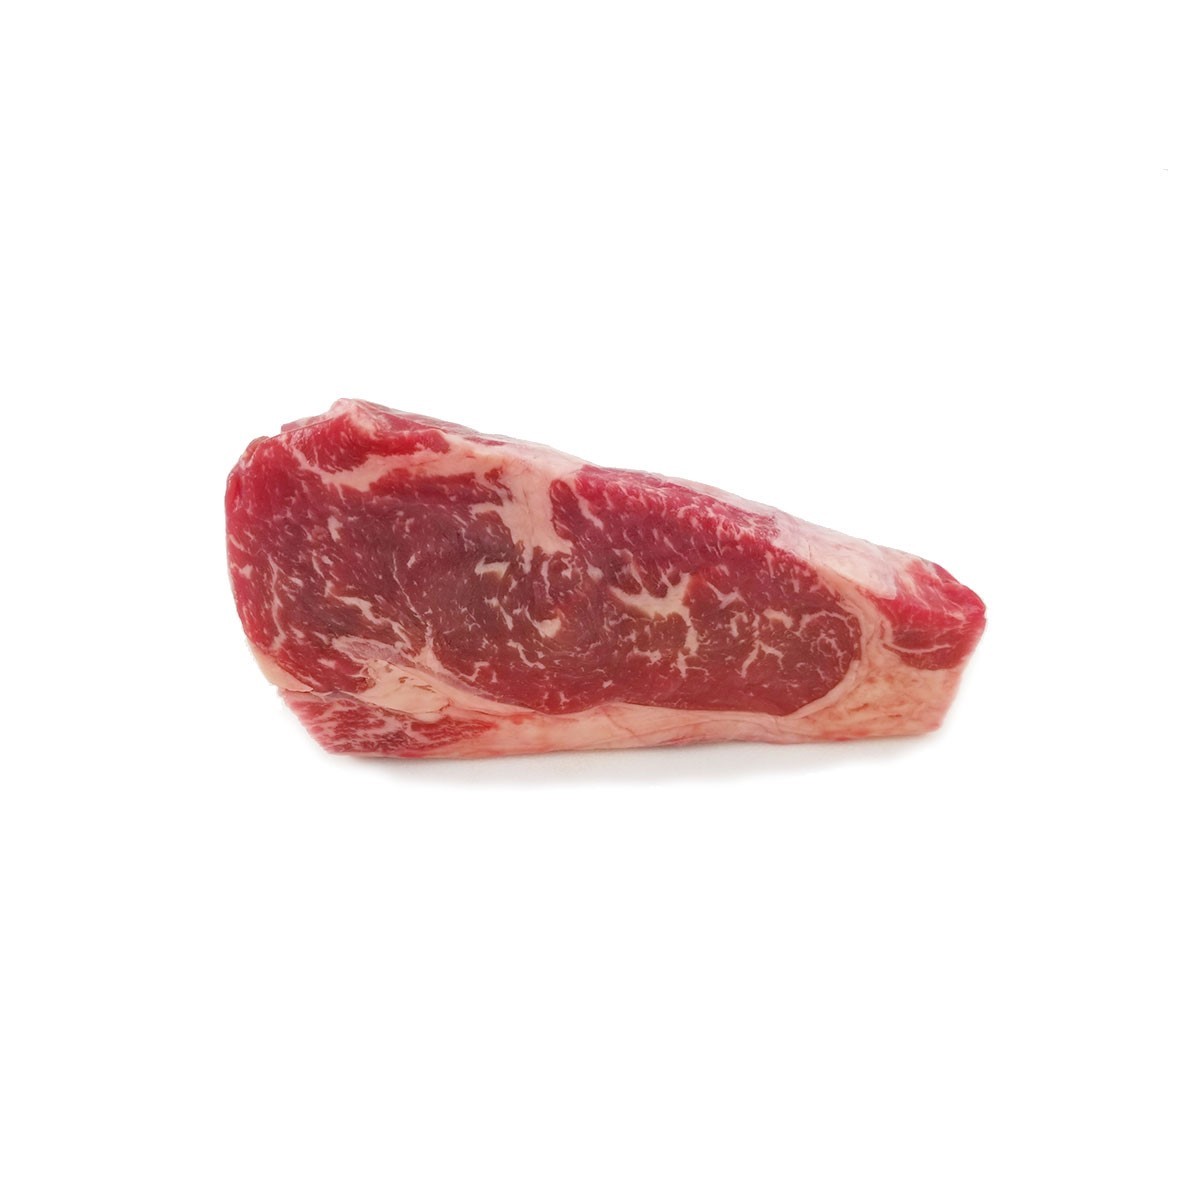 H.G. Walter Dry Aged (35 days) Sirloin Steak - UK